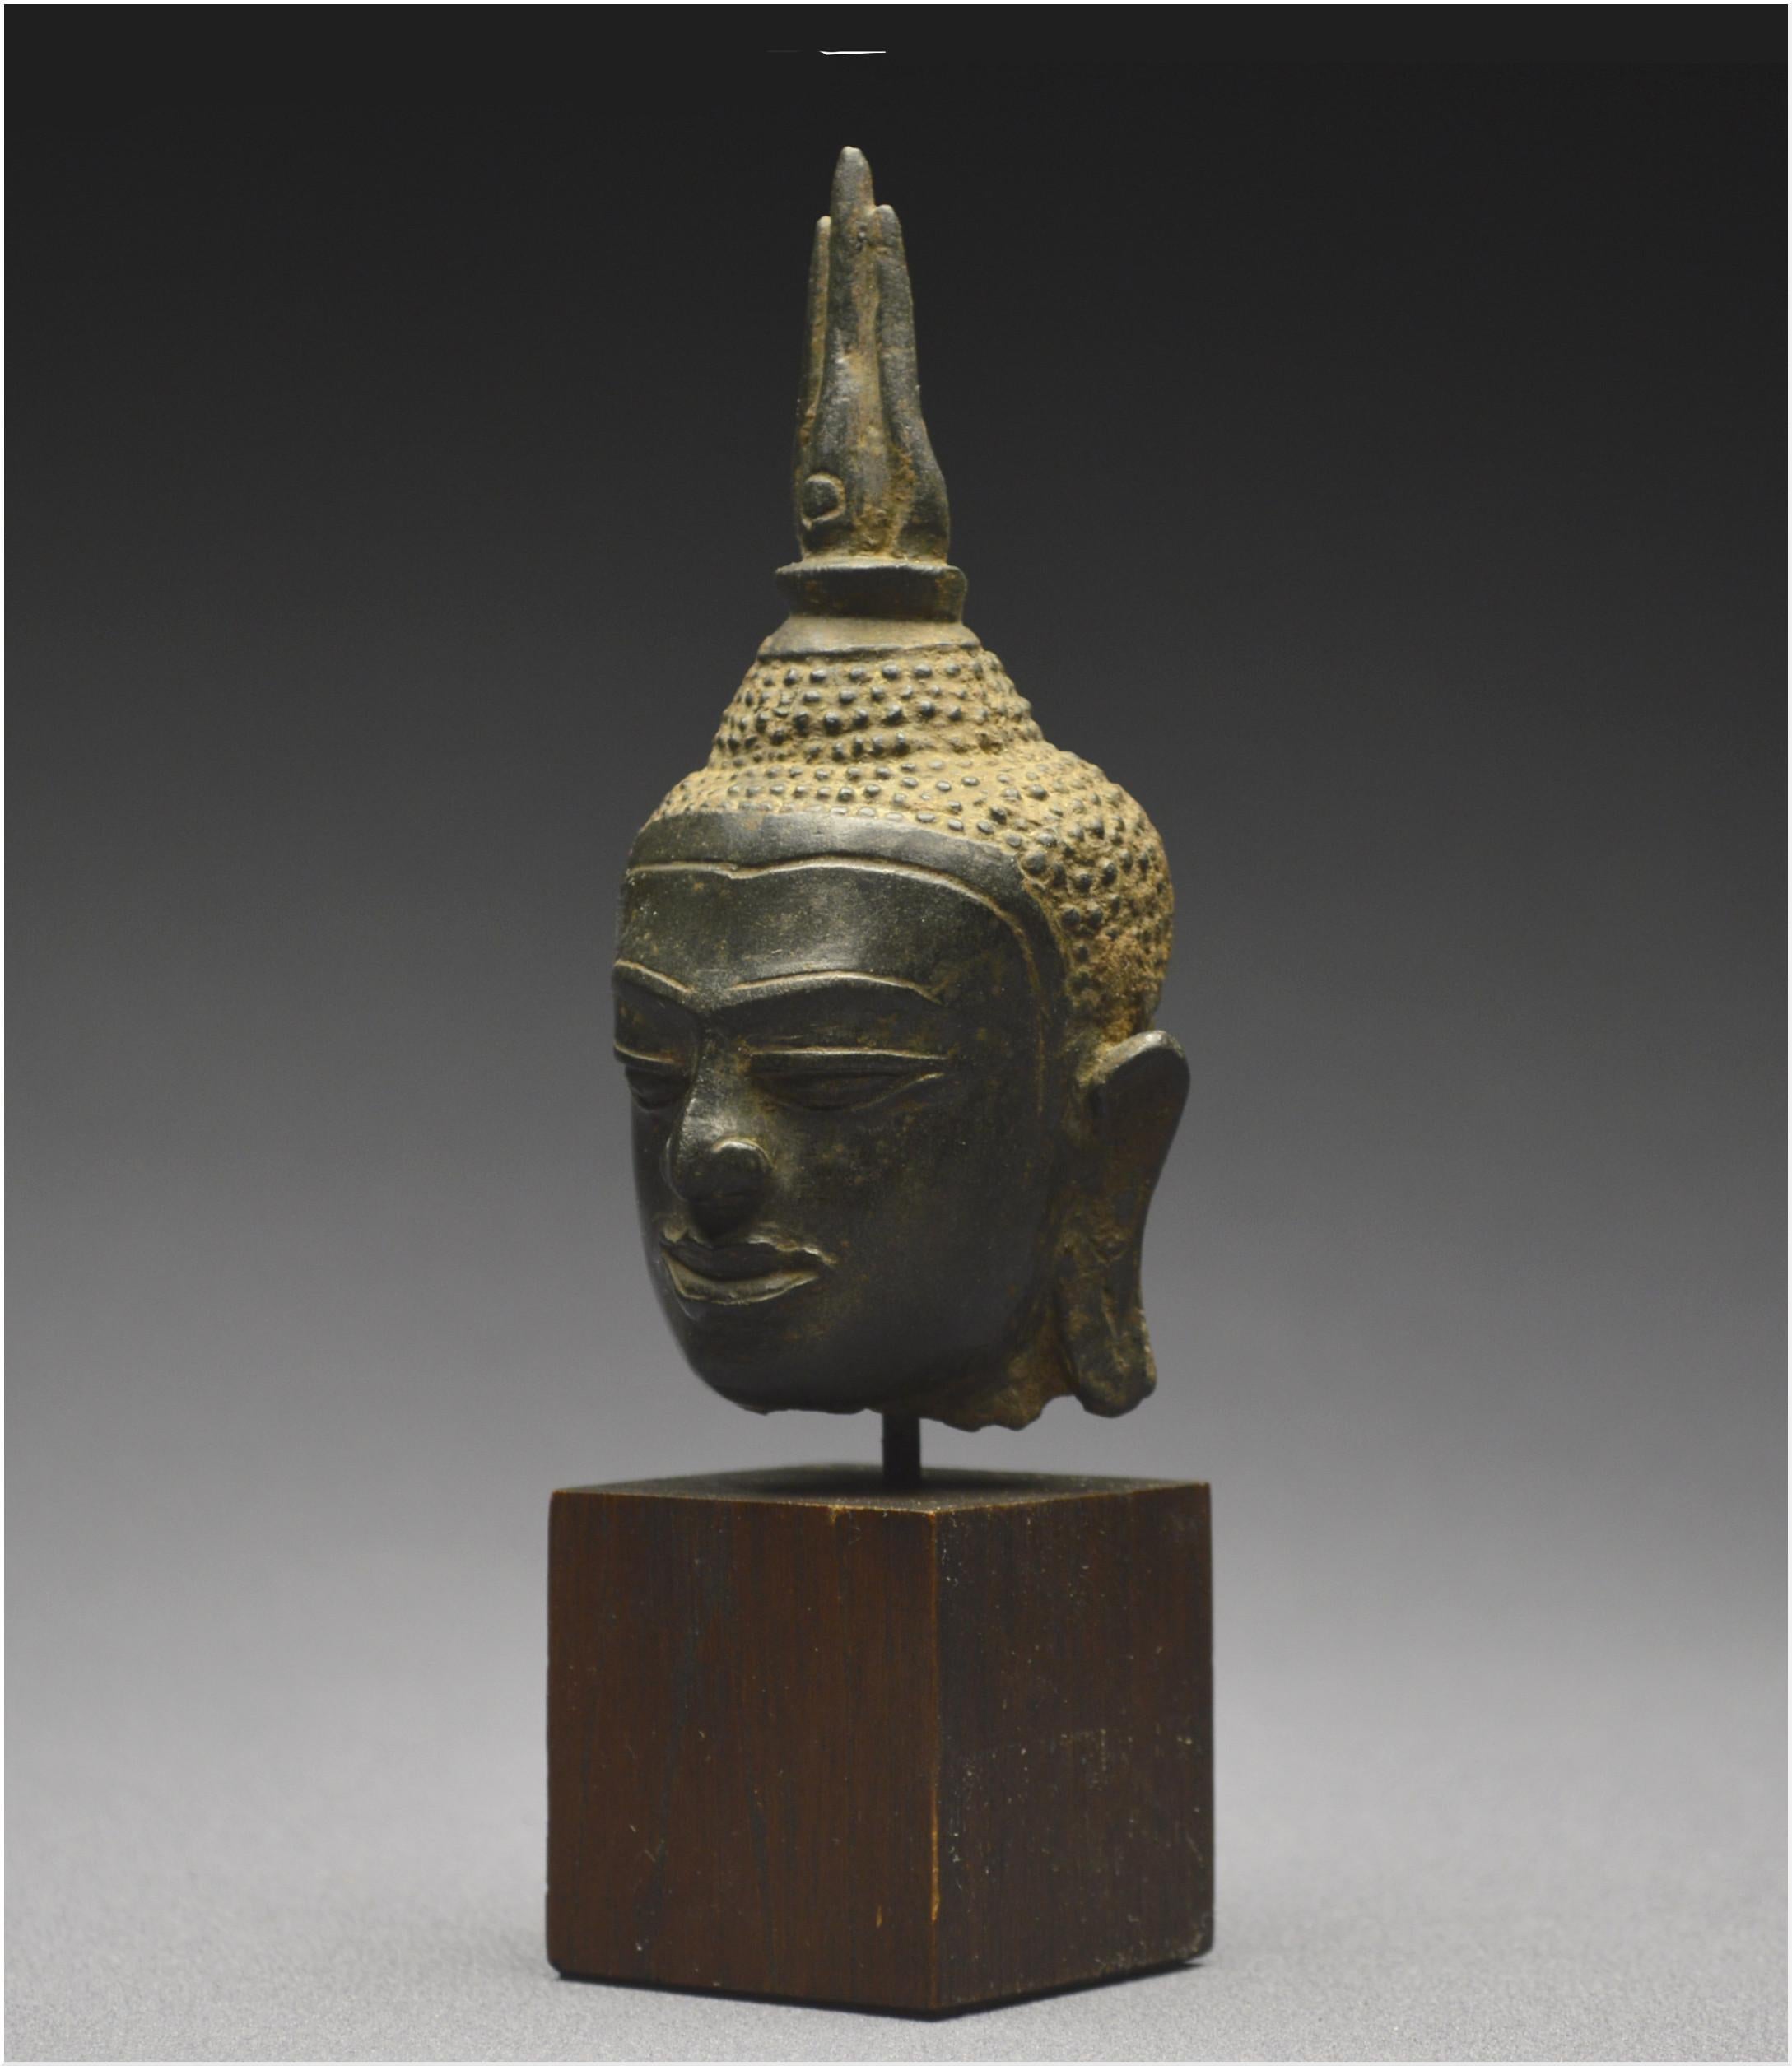 18th Century and Earlier Kingdom of Siam, 14th - 15th century, U-Thong style, Small bronze Buddha head 